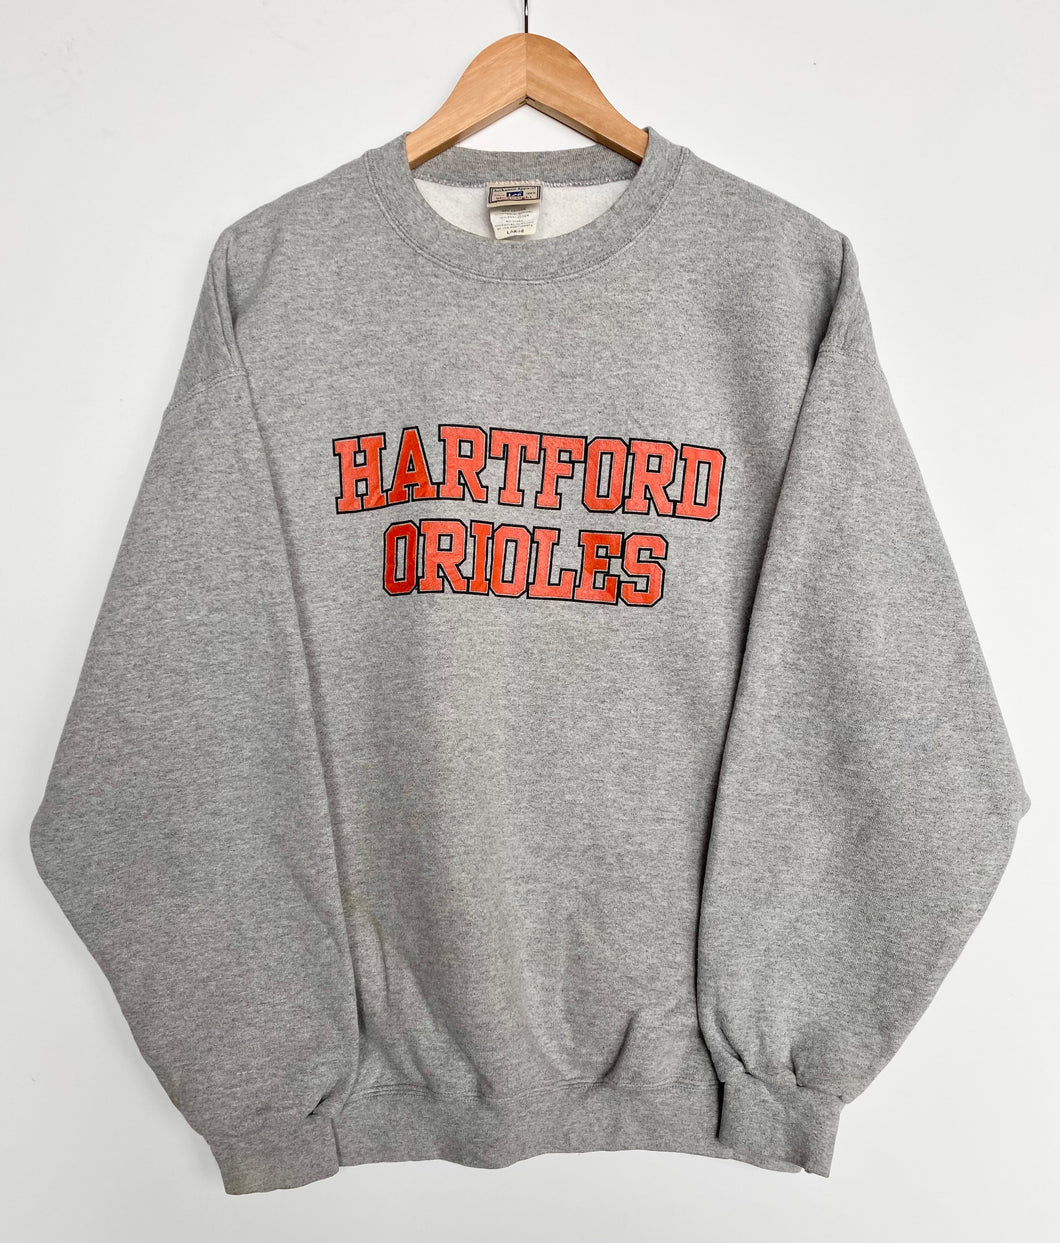 Lee Hartford Orioles sweatshirt (L)